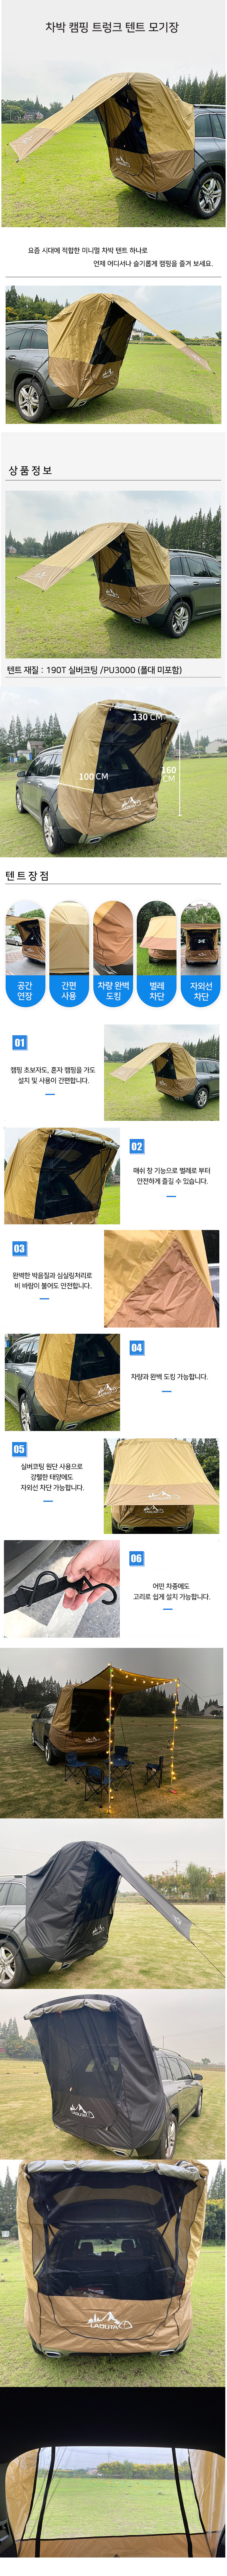 car-tent_1.jpg